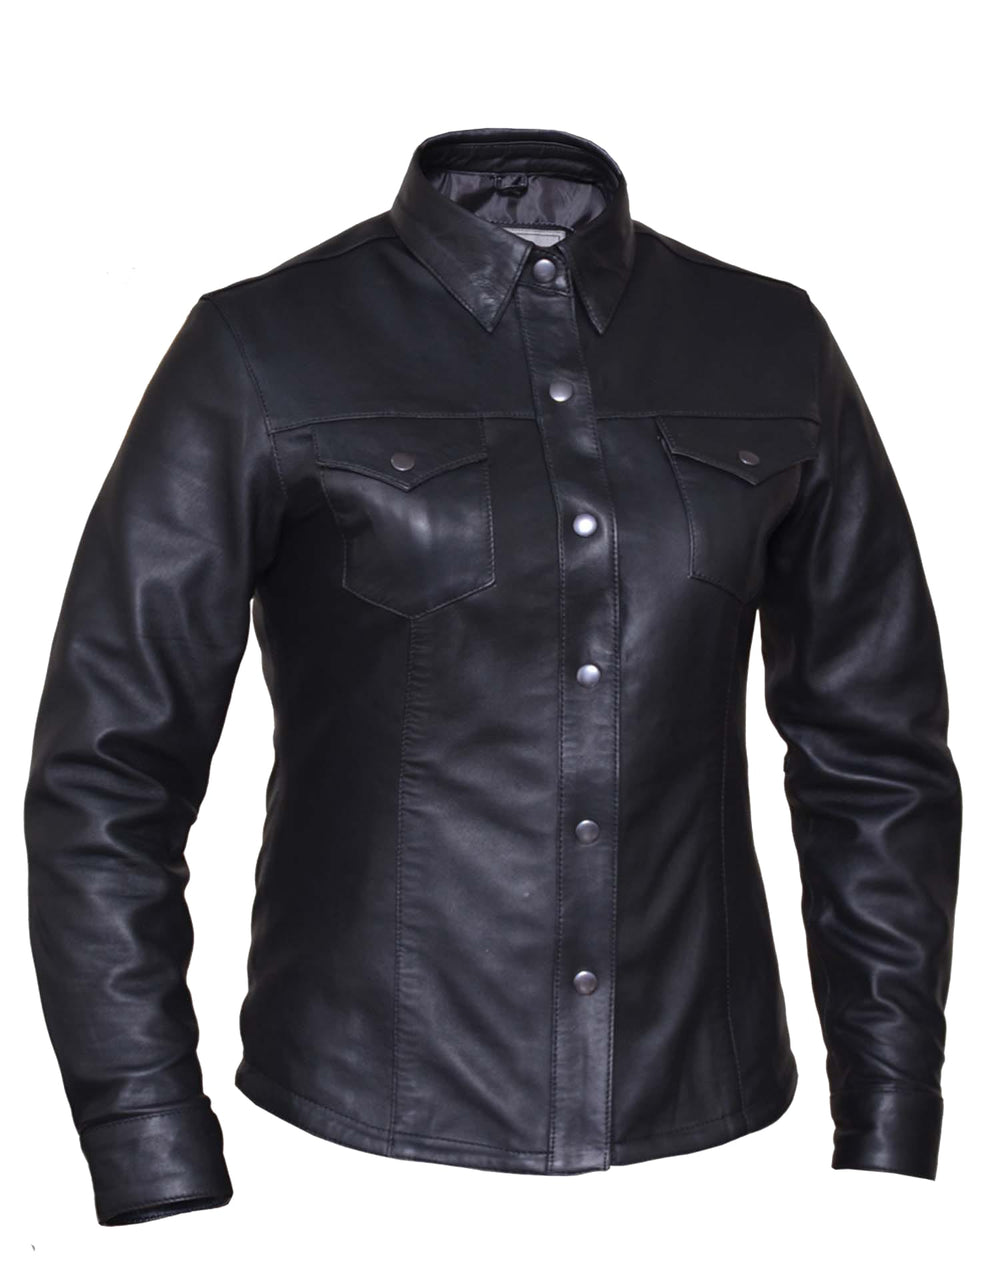 Ladies Premium Lightweight Leather Motorcycle Shirt